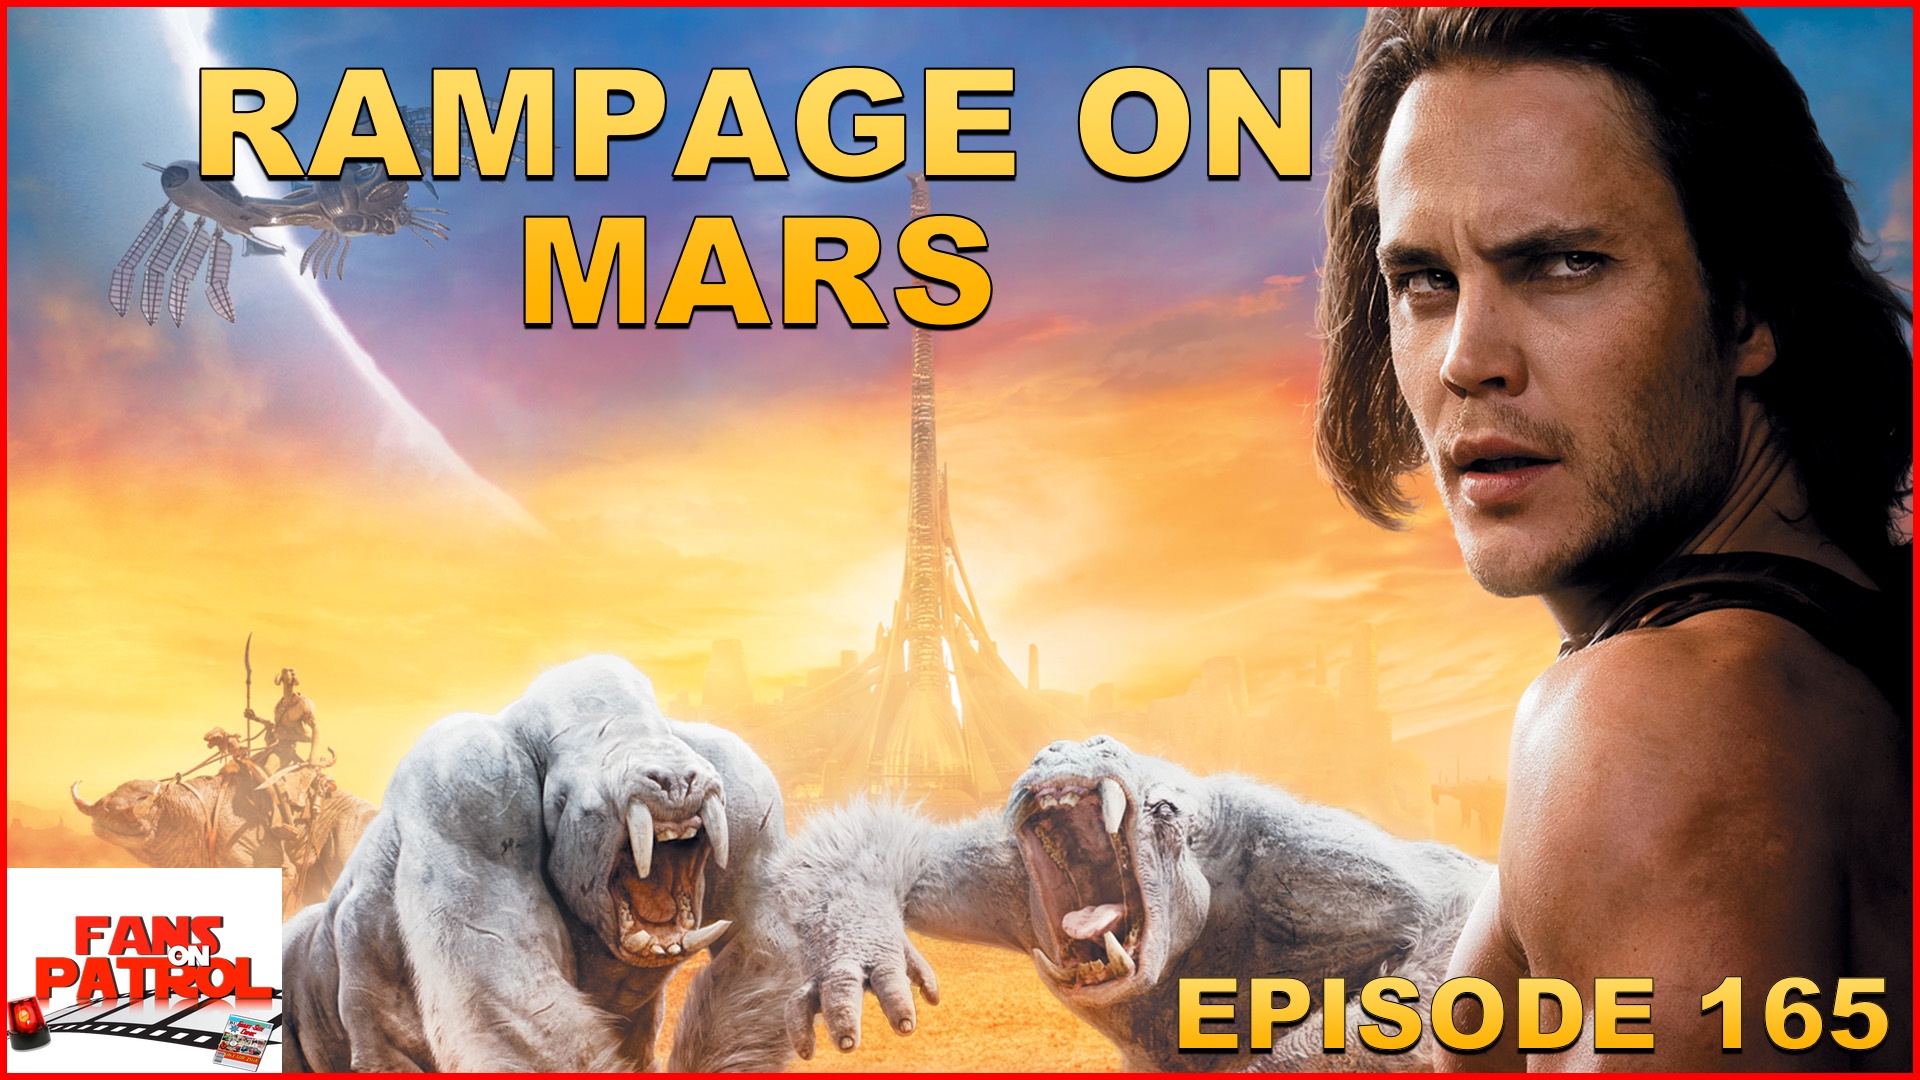 Rampage on Mars Episode 165